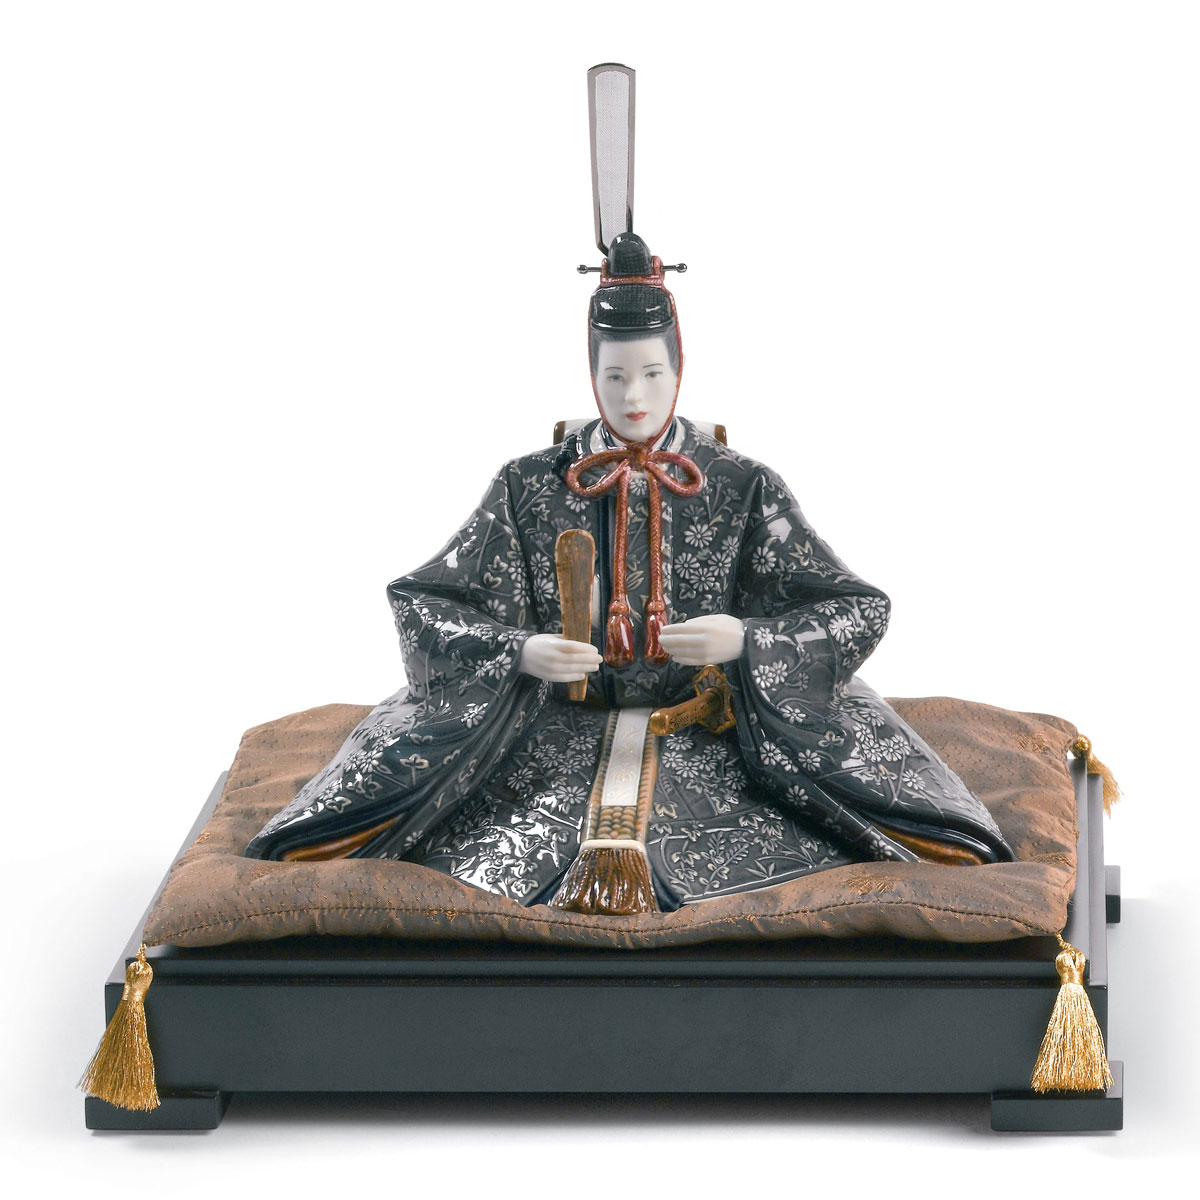 Lladro High Porcelain, Hina Dolls - Emperor Sculpture. Limited Edition